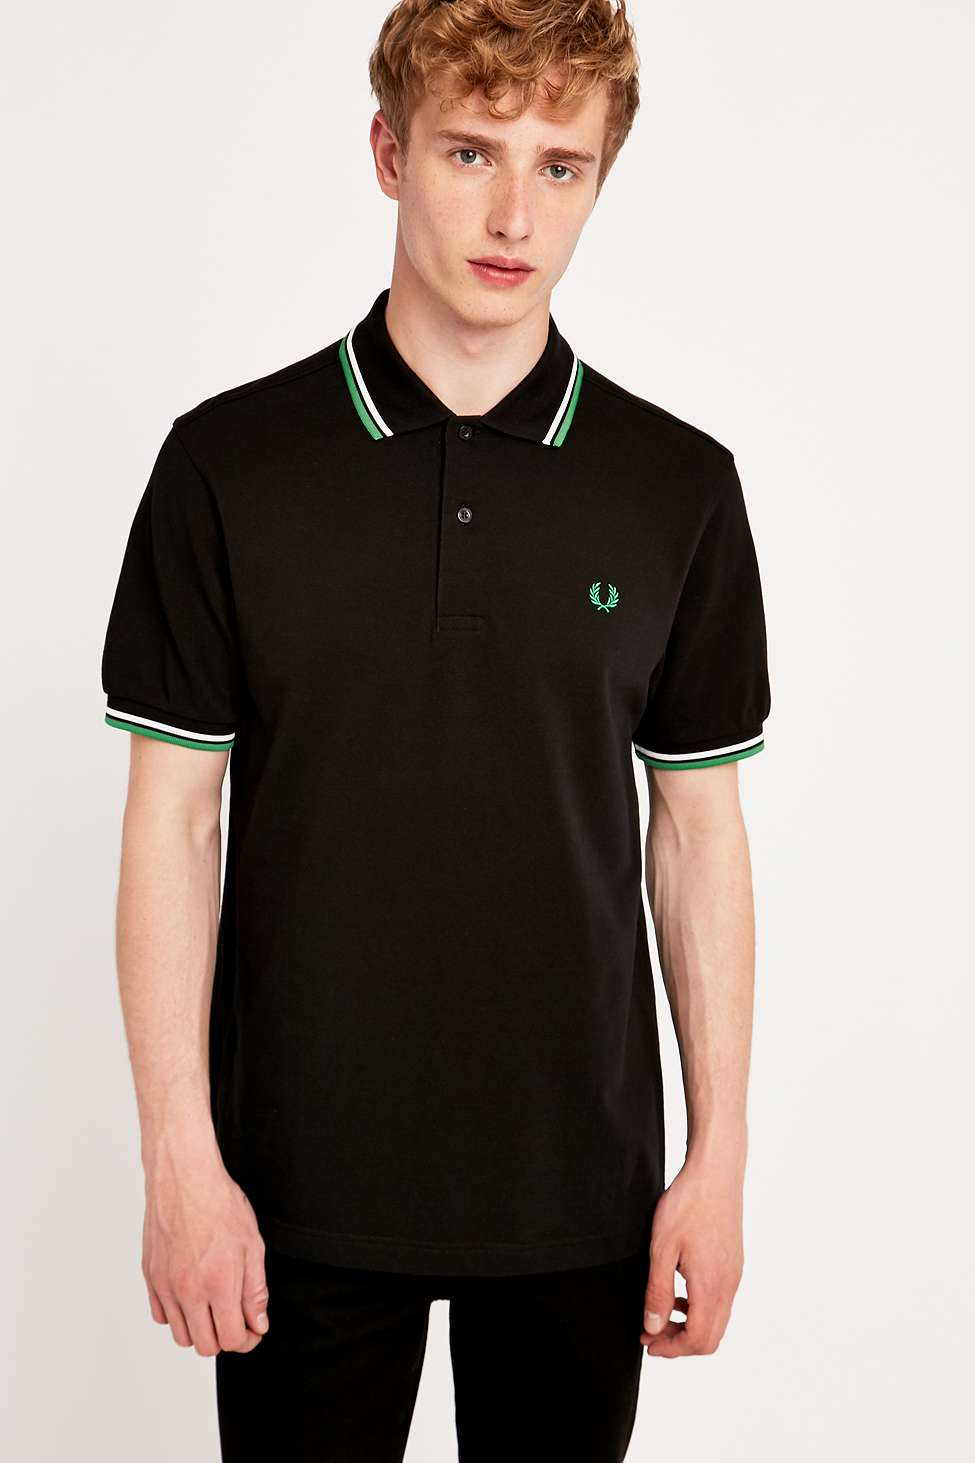 black and green polo shirt